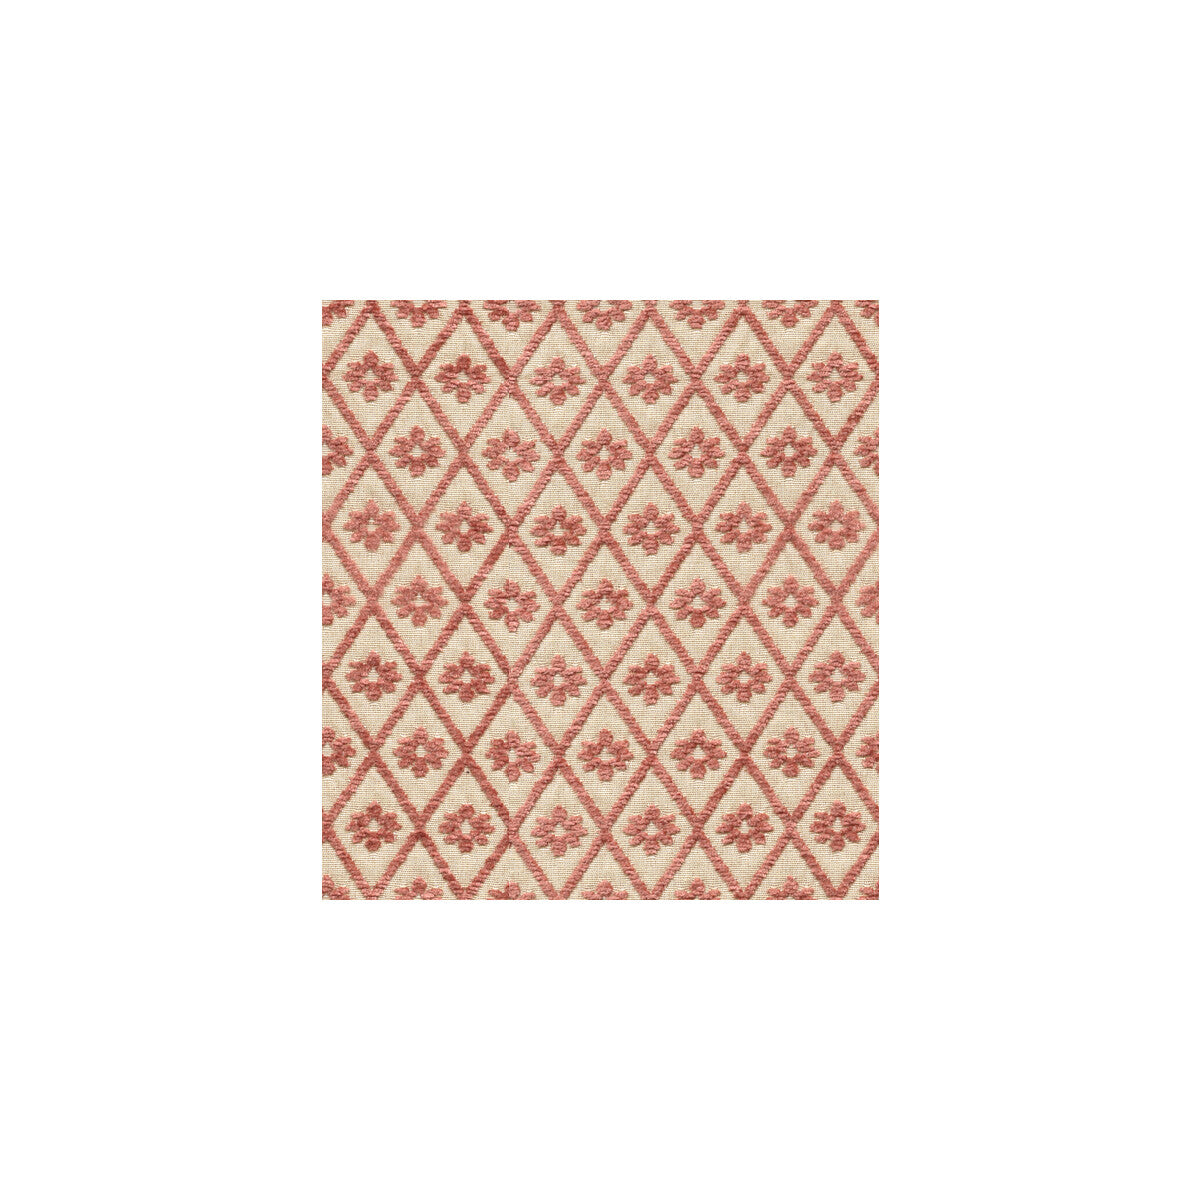 Kravet Design fabric in 31390-12 color - pattern 31390.12.0 - by Kravet Design in the Gis collection